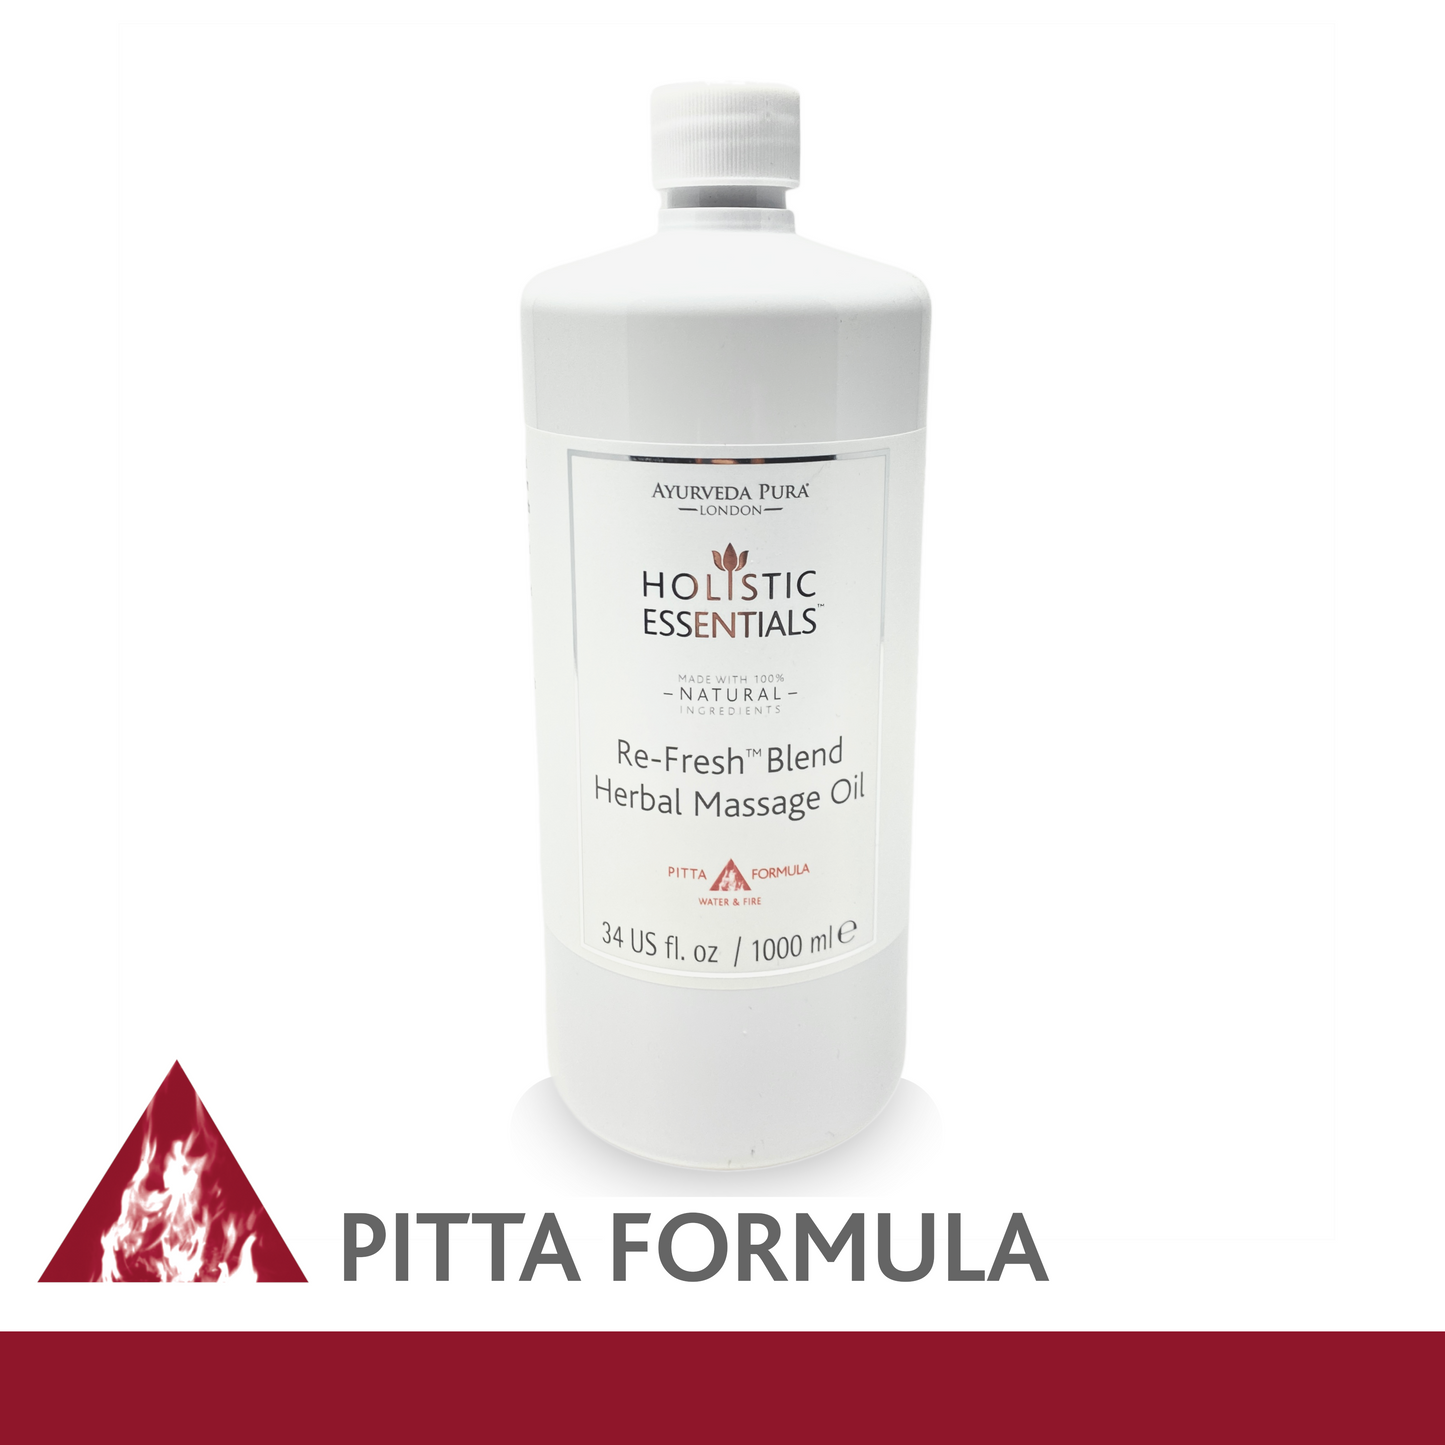 Re-Fresh Blend Herbal Massage Oil - Pitta Formula